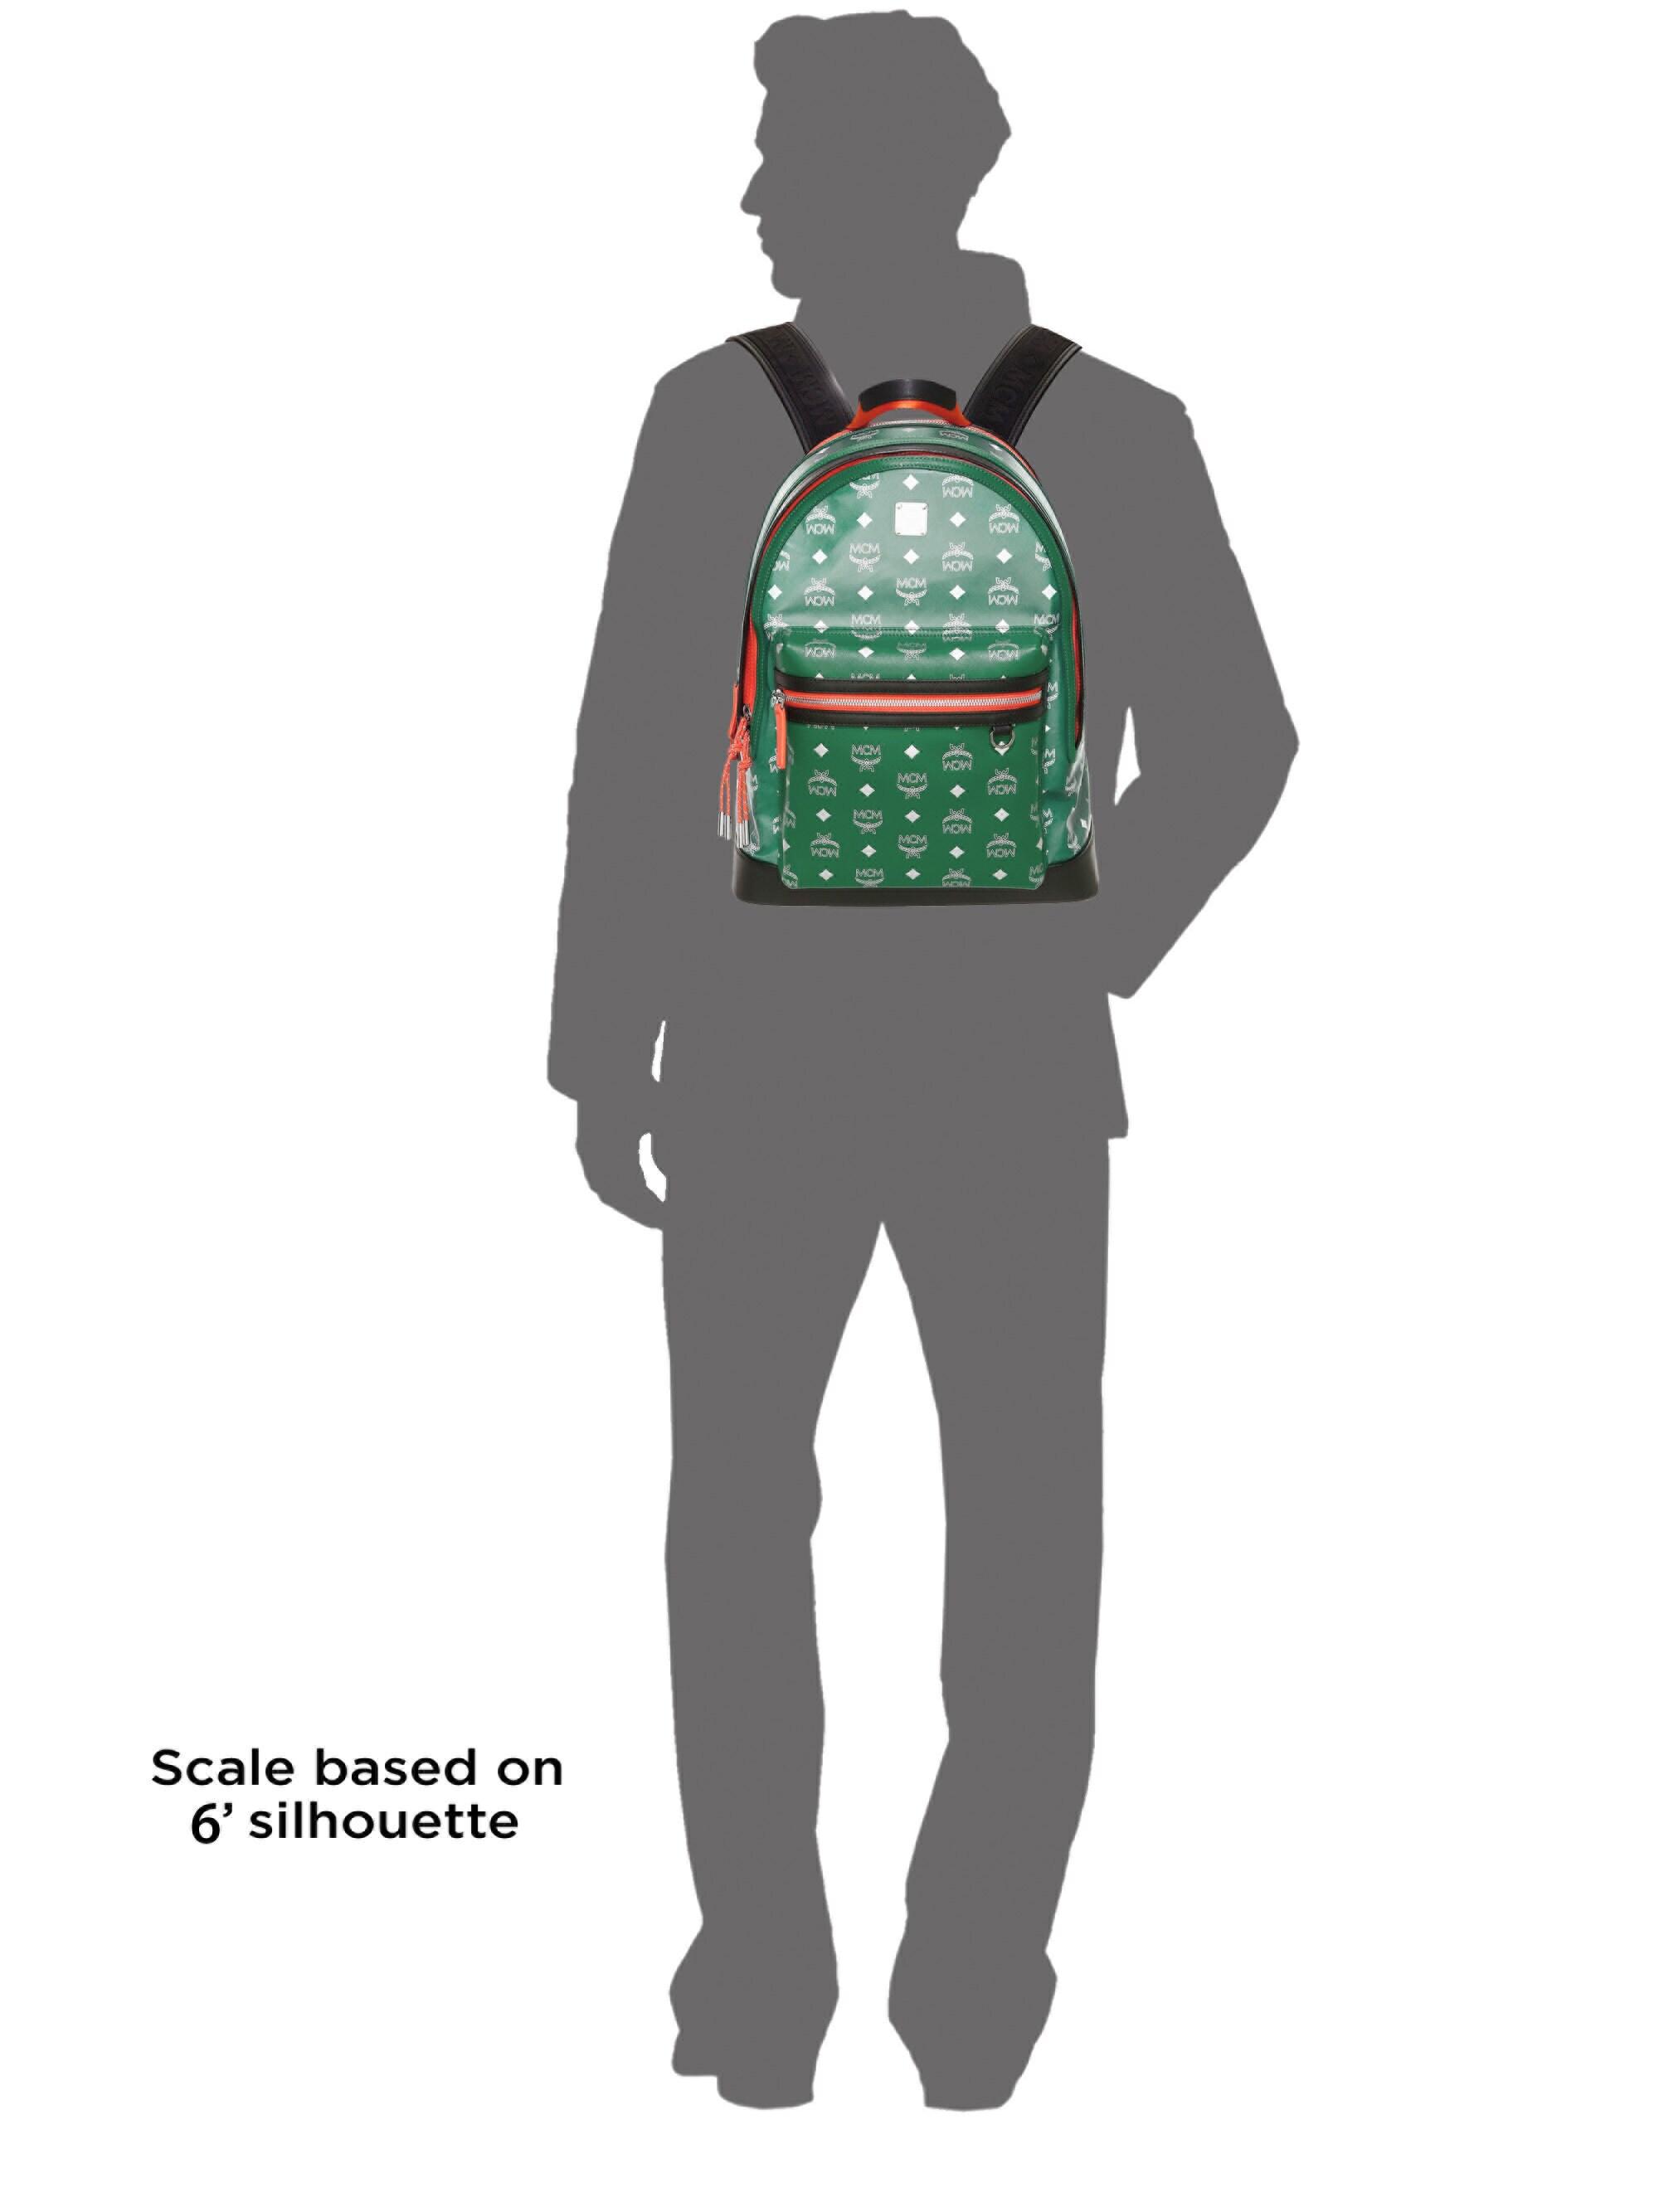 MCM Resnick Reflective Nylon Backpack in Green for Men